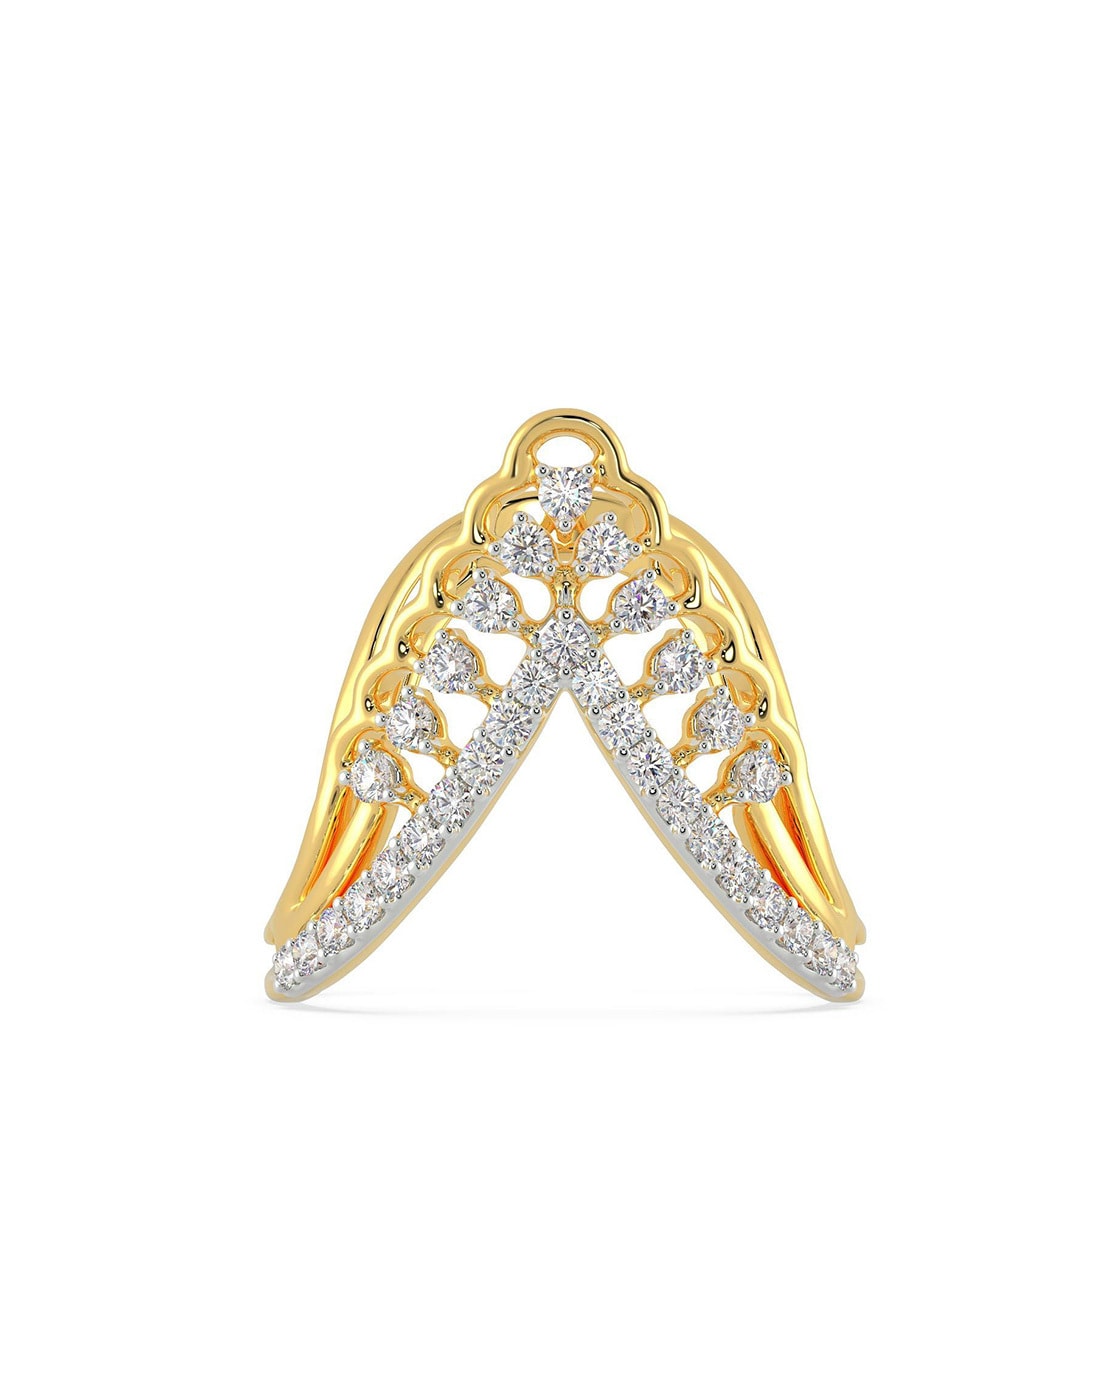 Malabar Gold & Diamonds 22KT Yellow Gold Ring for Women : Amazon.in: Fashion